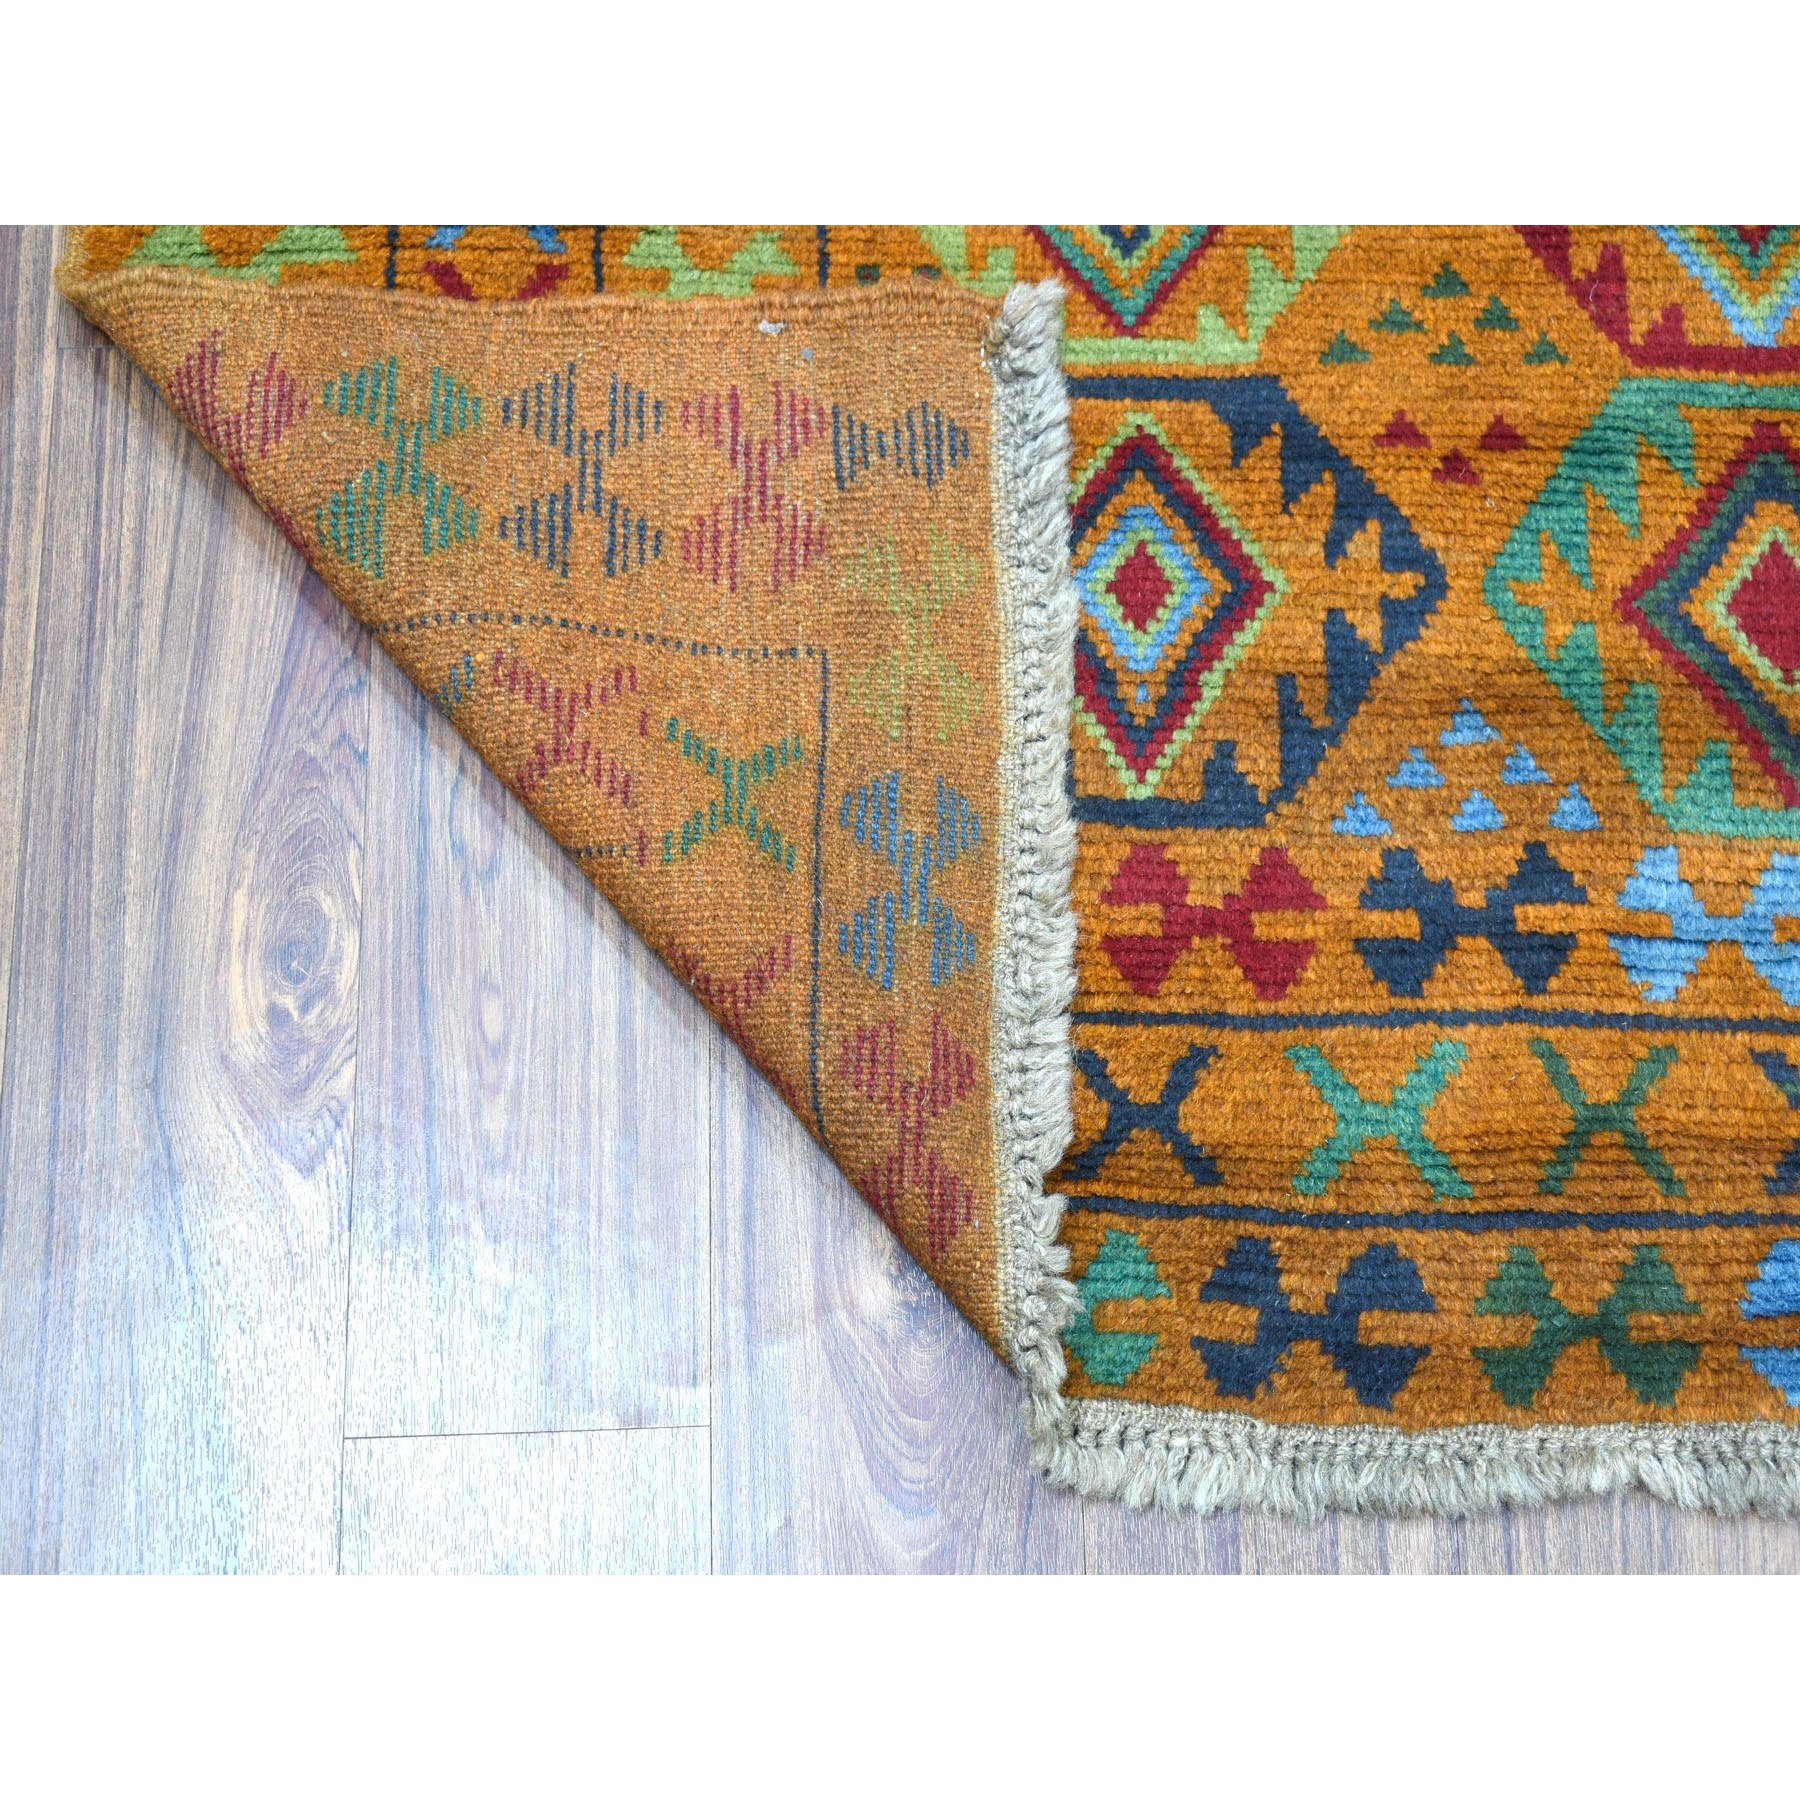 4'3"x6' Orange Colorful Afghan Baluch Tribal Design Hand Woven Pure Wool Oriental Rug 